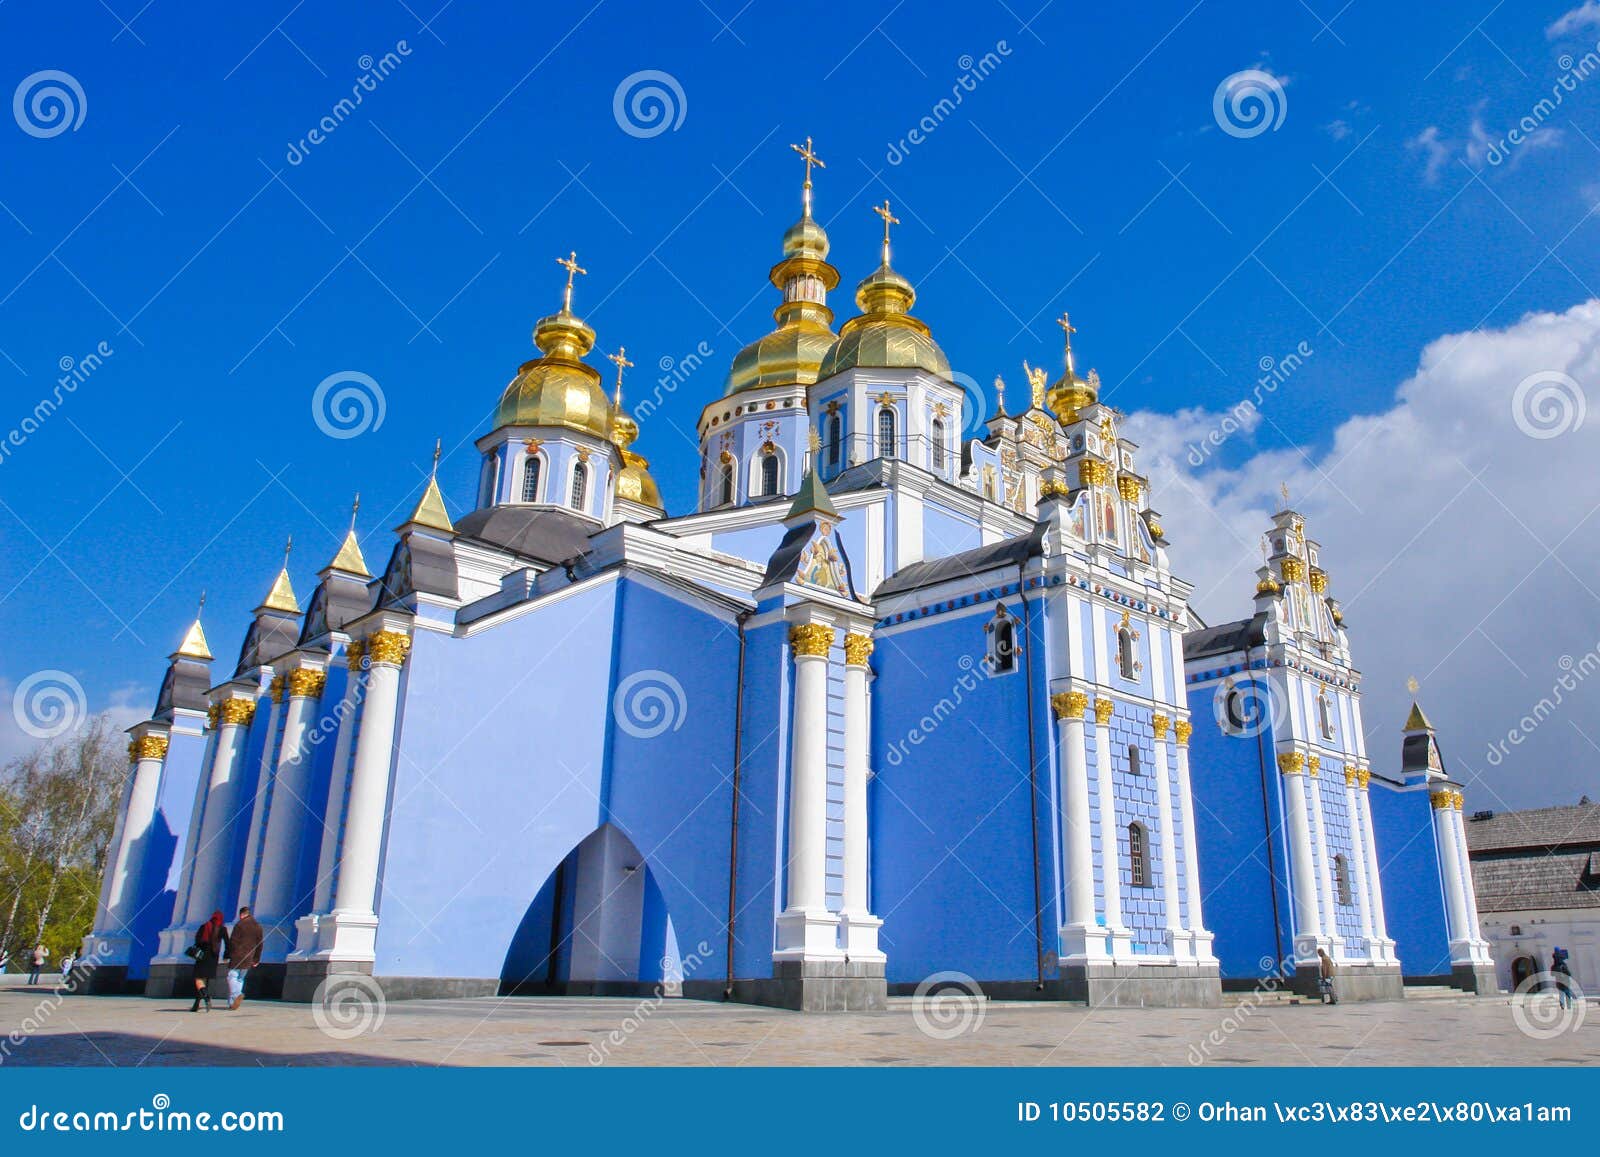 saint michael's cathedral in kiev, ukraine